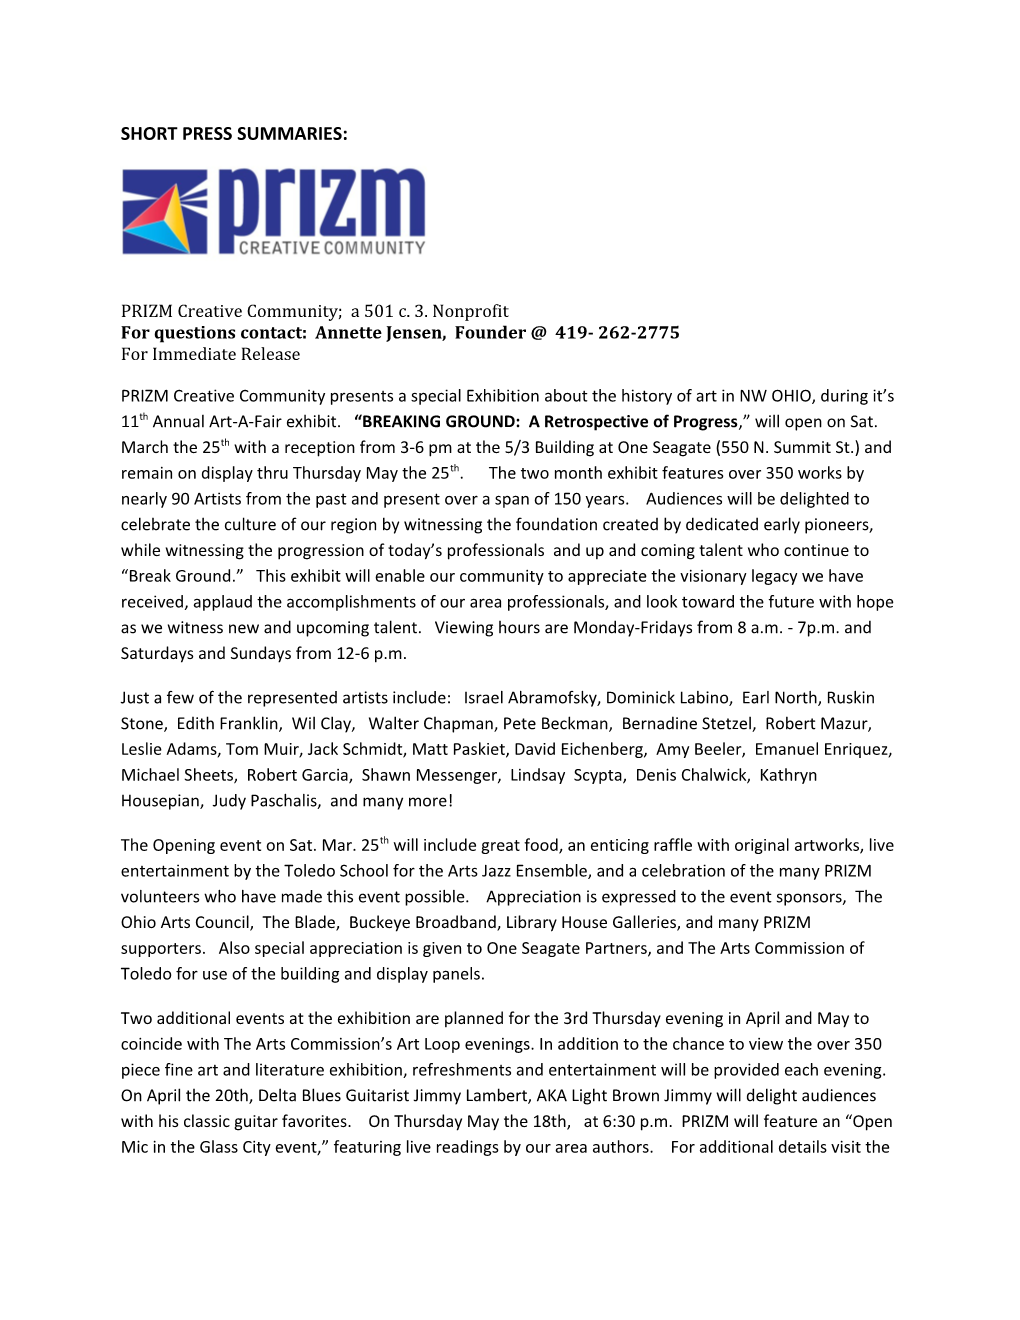 PRIZM Creative Community; a 501 C. 3. Nonprofit